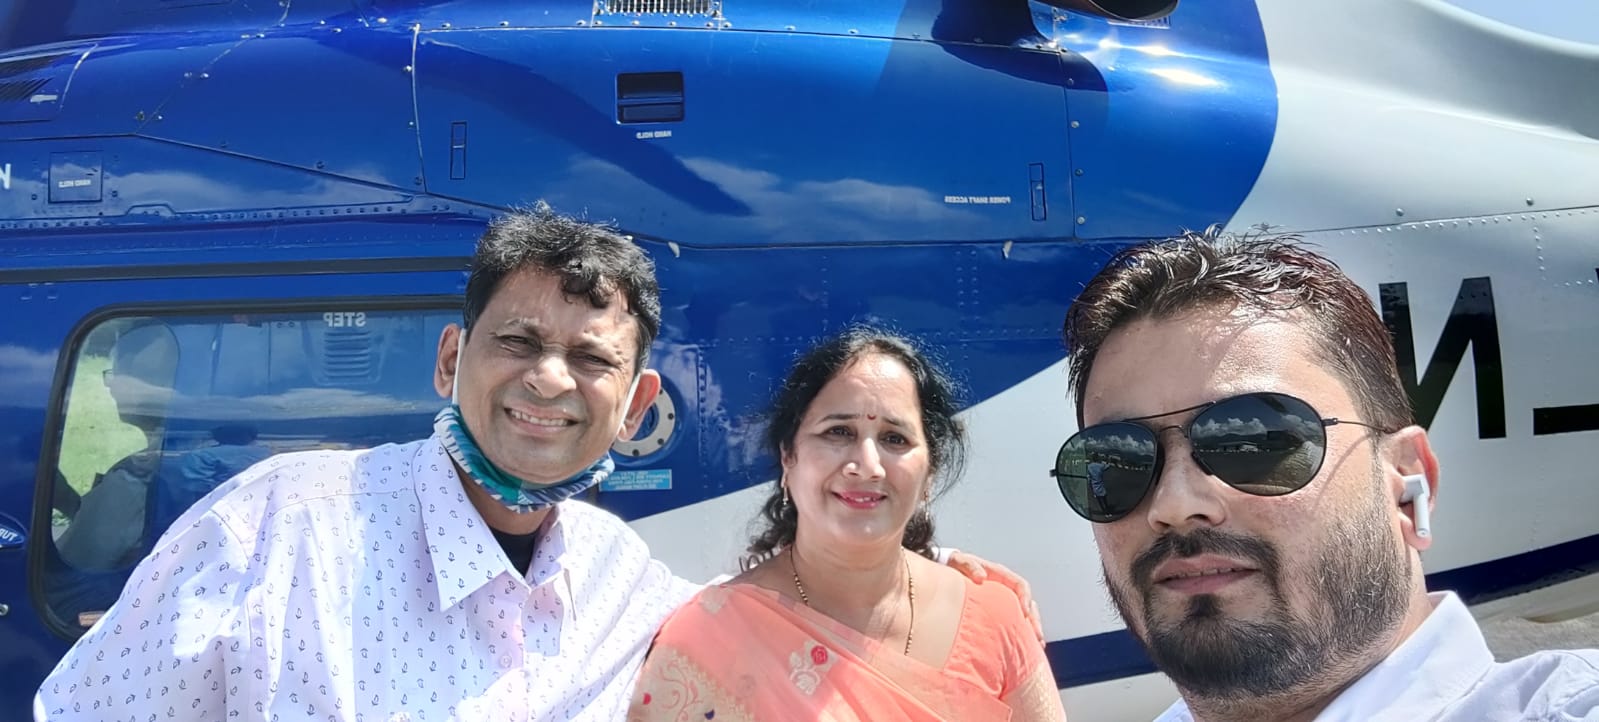 Kedarnath by helicopter - Ex Dehradun ( Same Day )